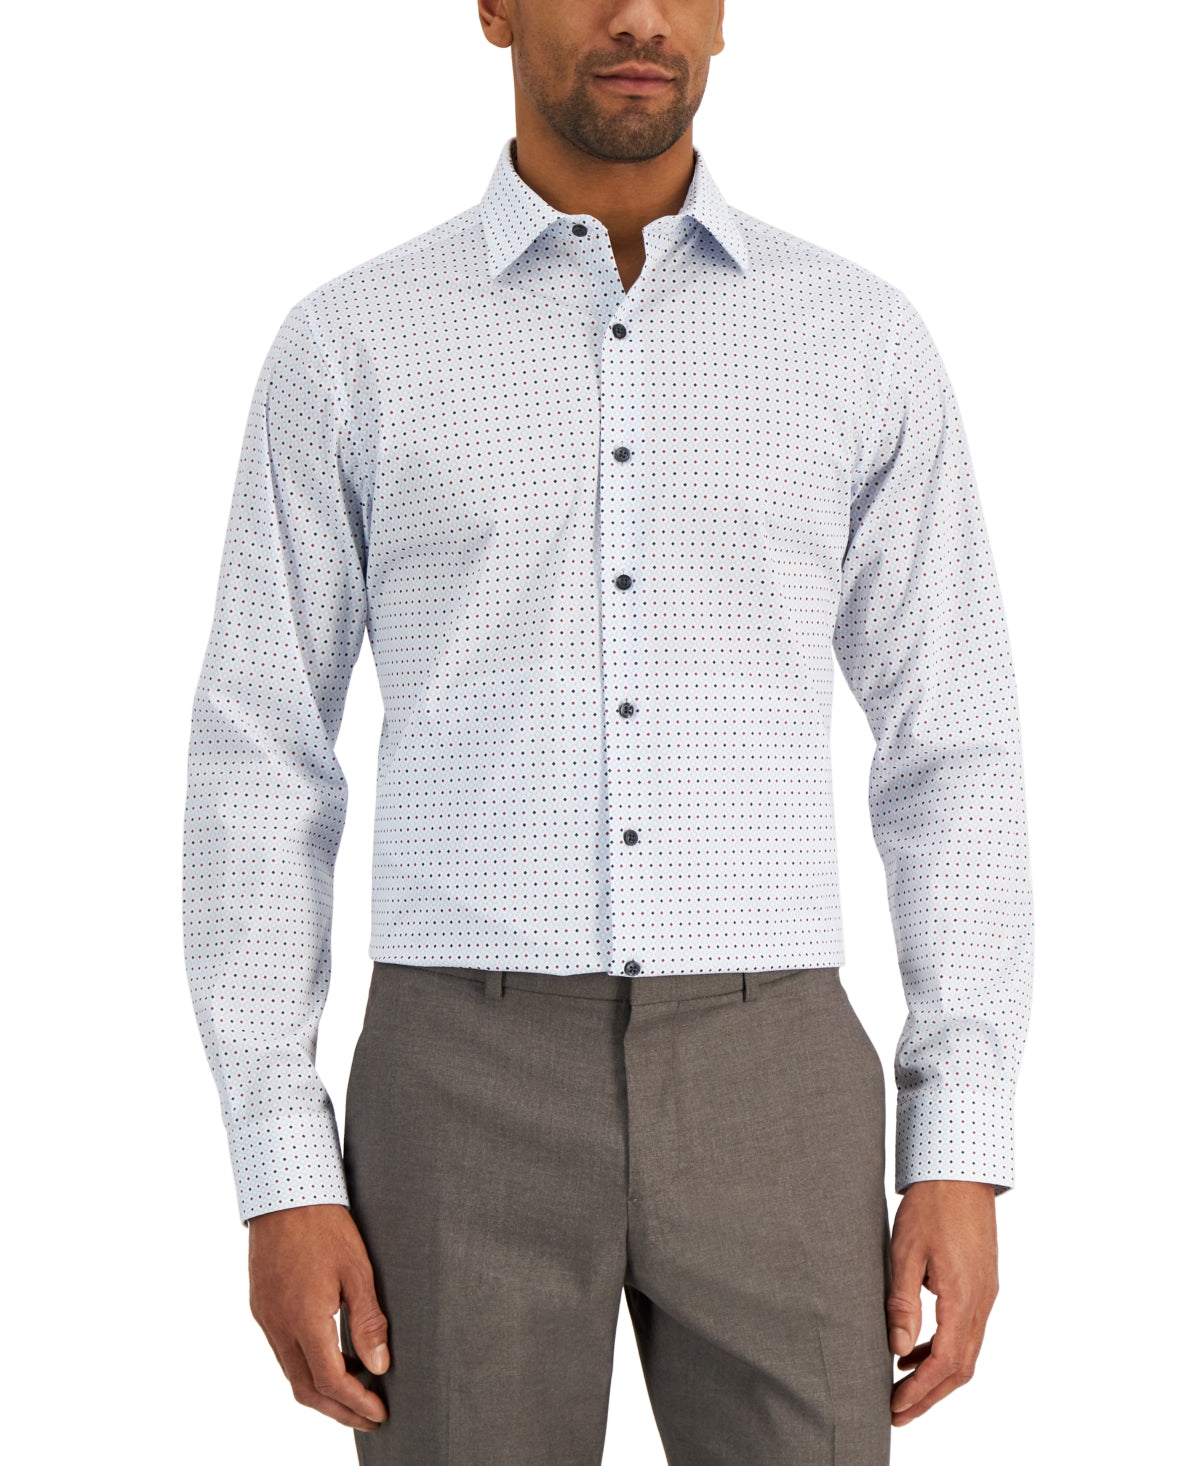 Alfani Men's White Blueberry Slim Fit Dress Medium Button Down Shirt